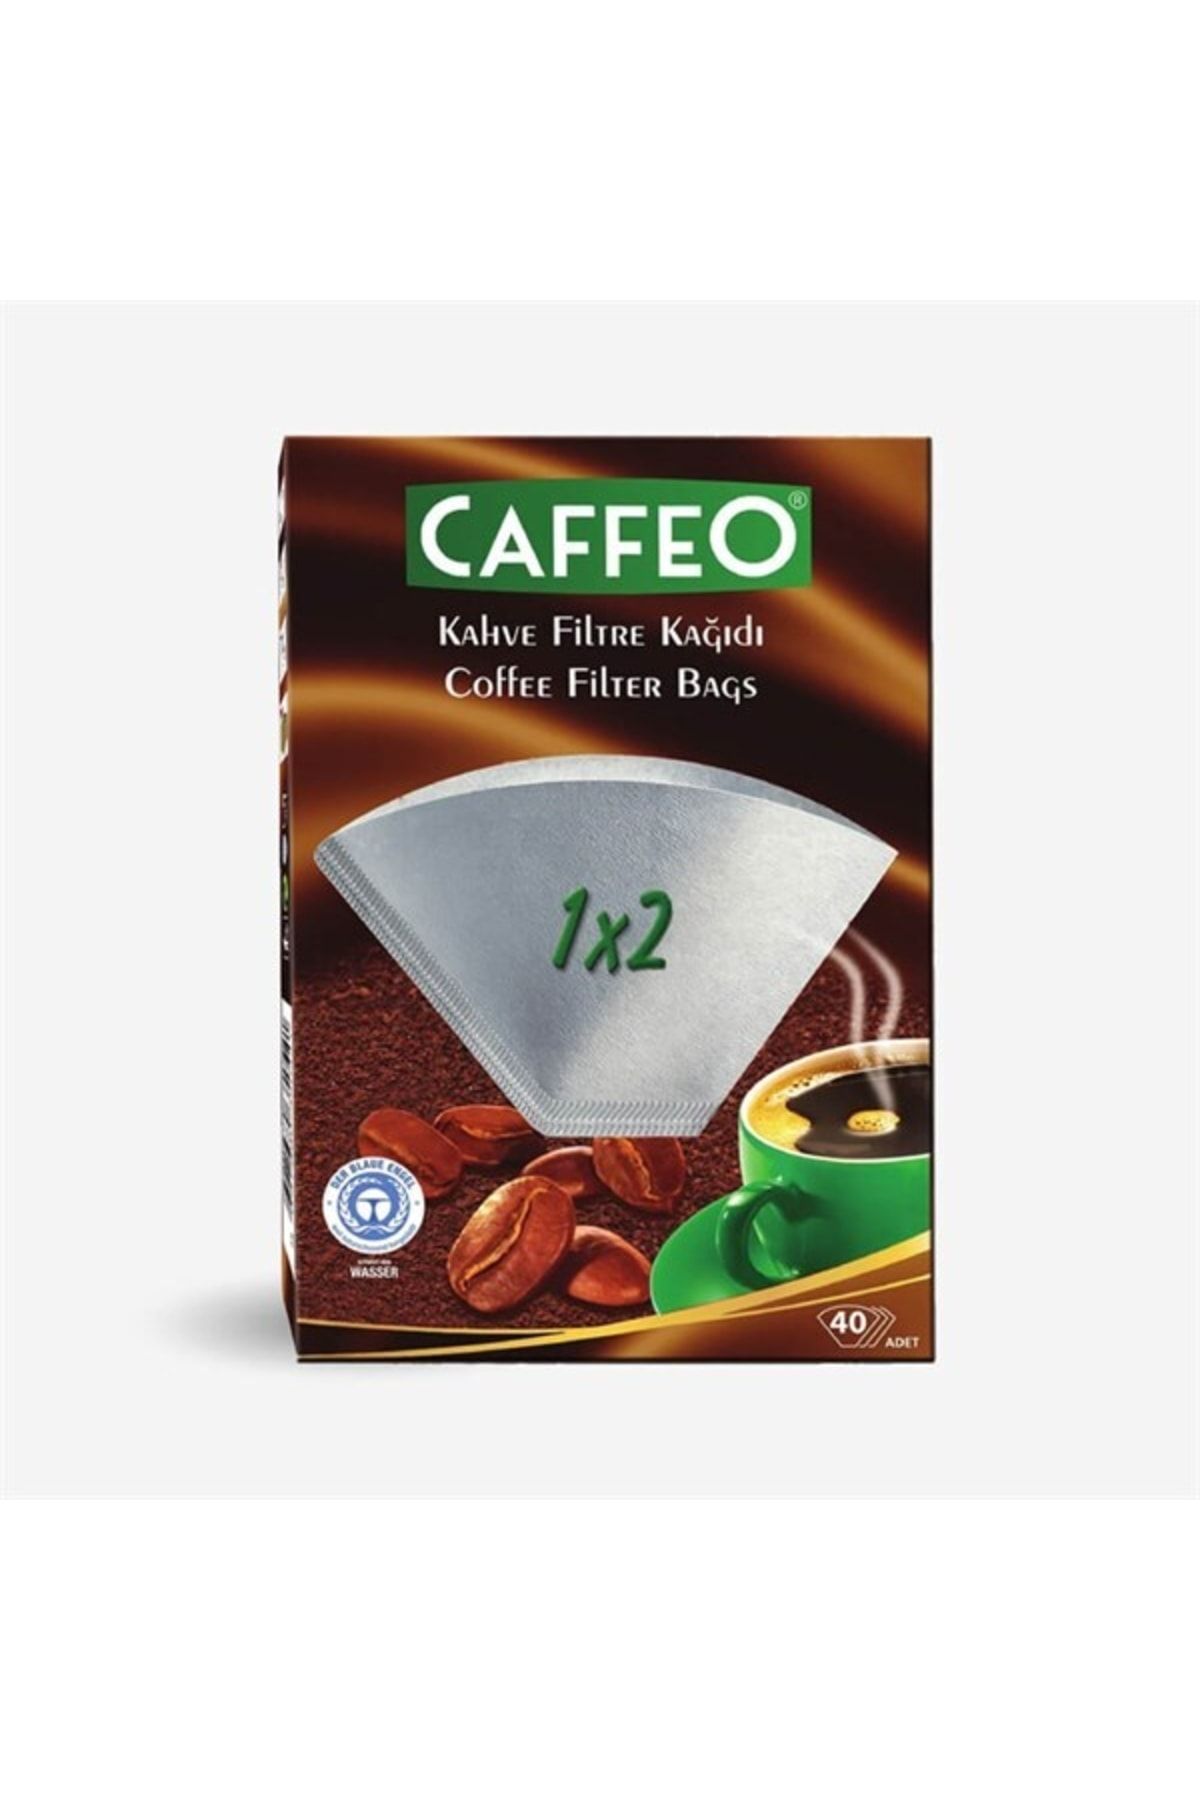 Caffeo Filtre Kahve Kağıdı 1x2 40 Lı